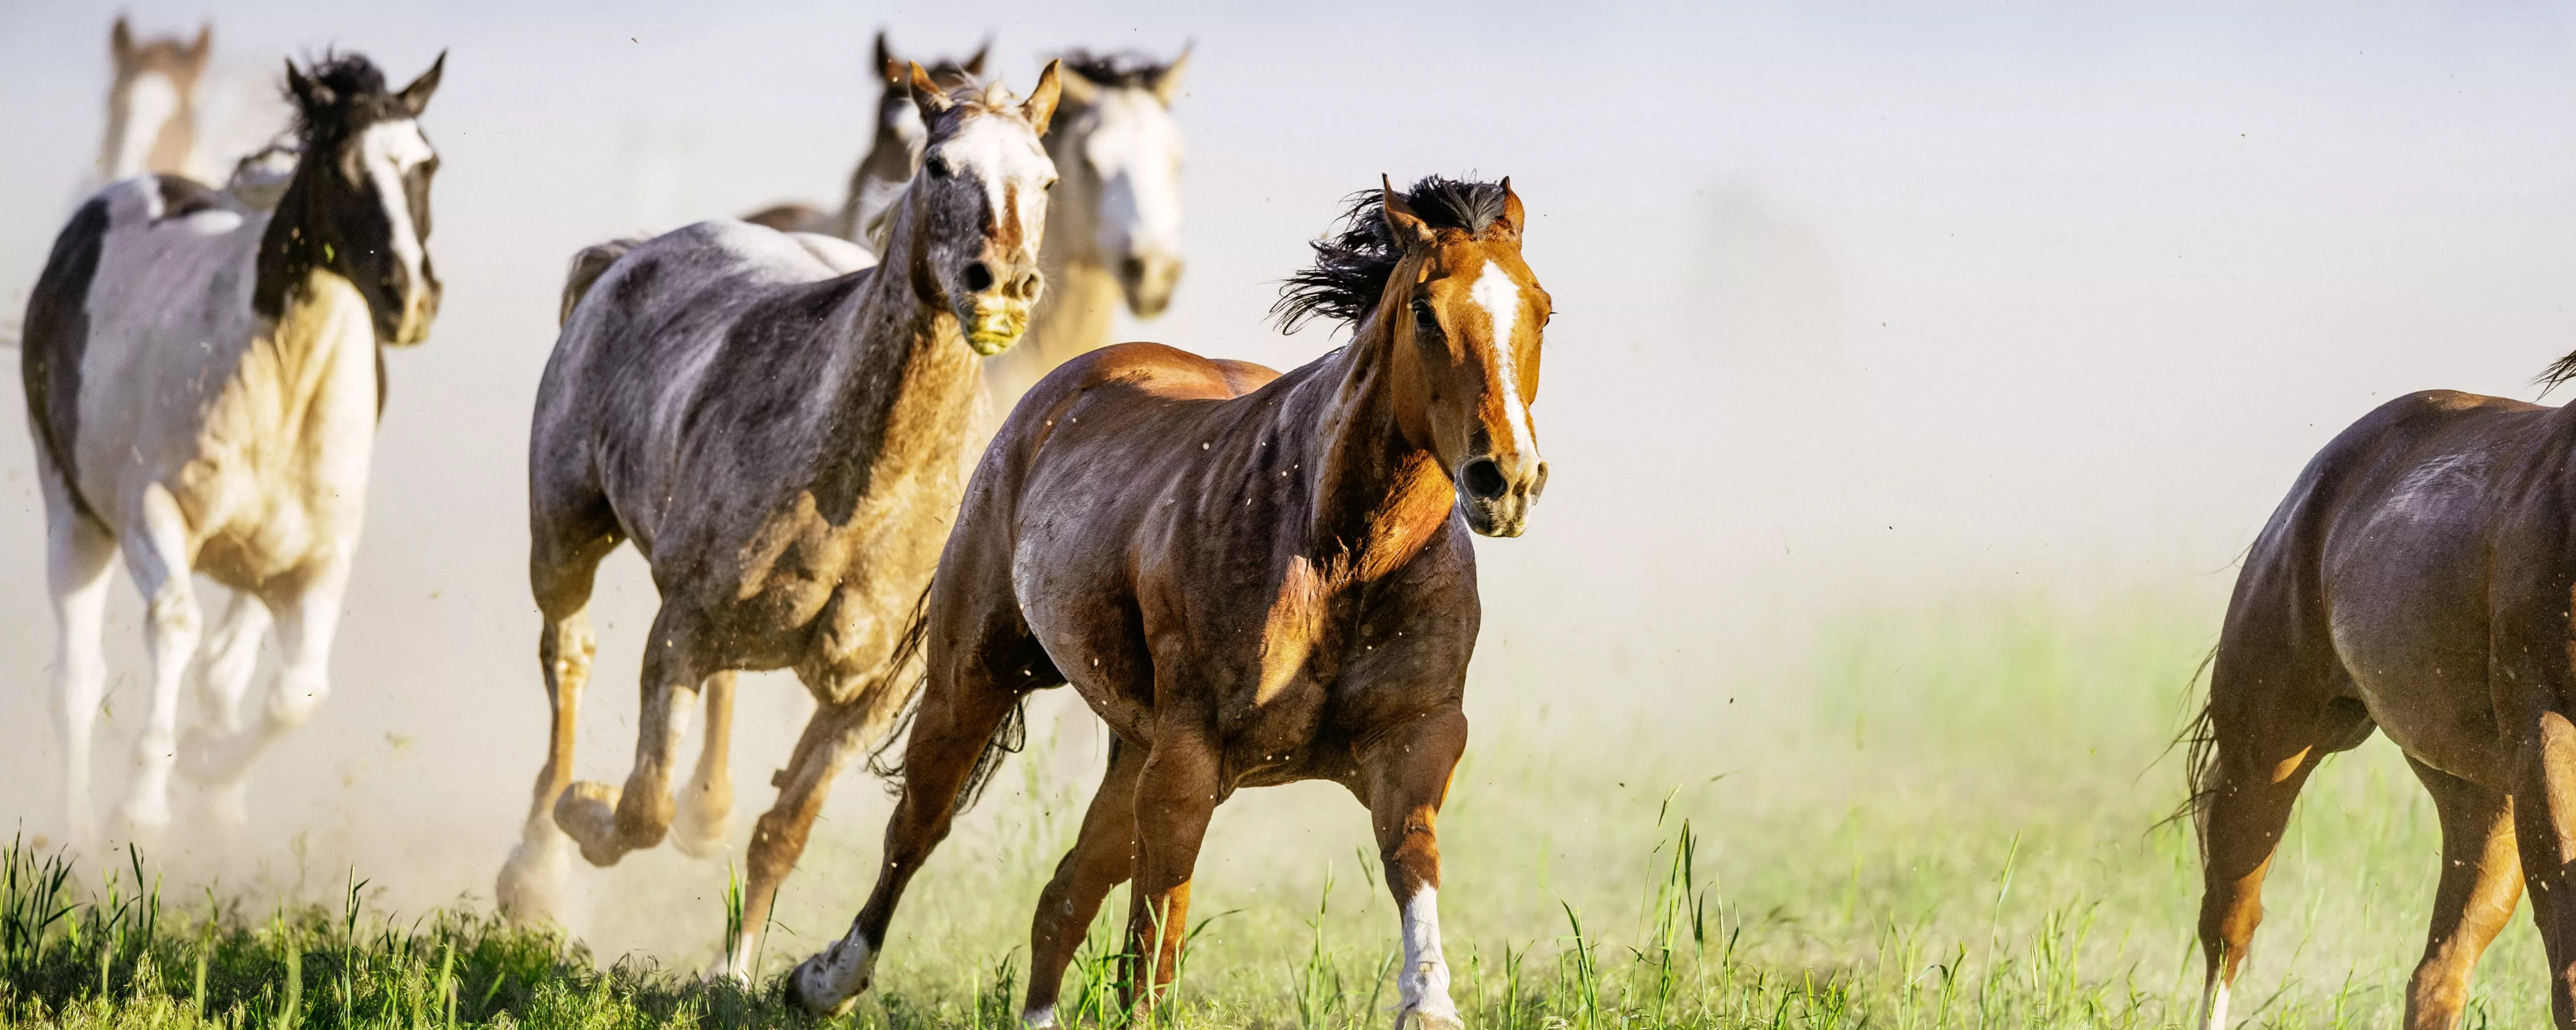 Pferde in Bewegung